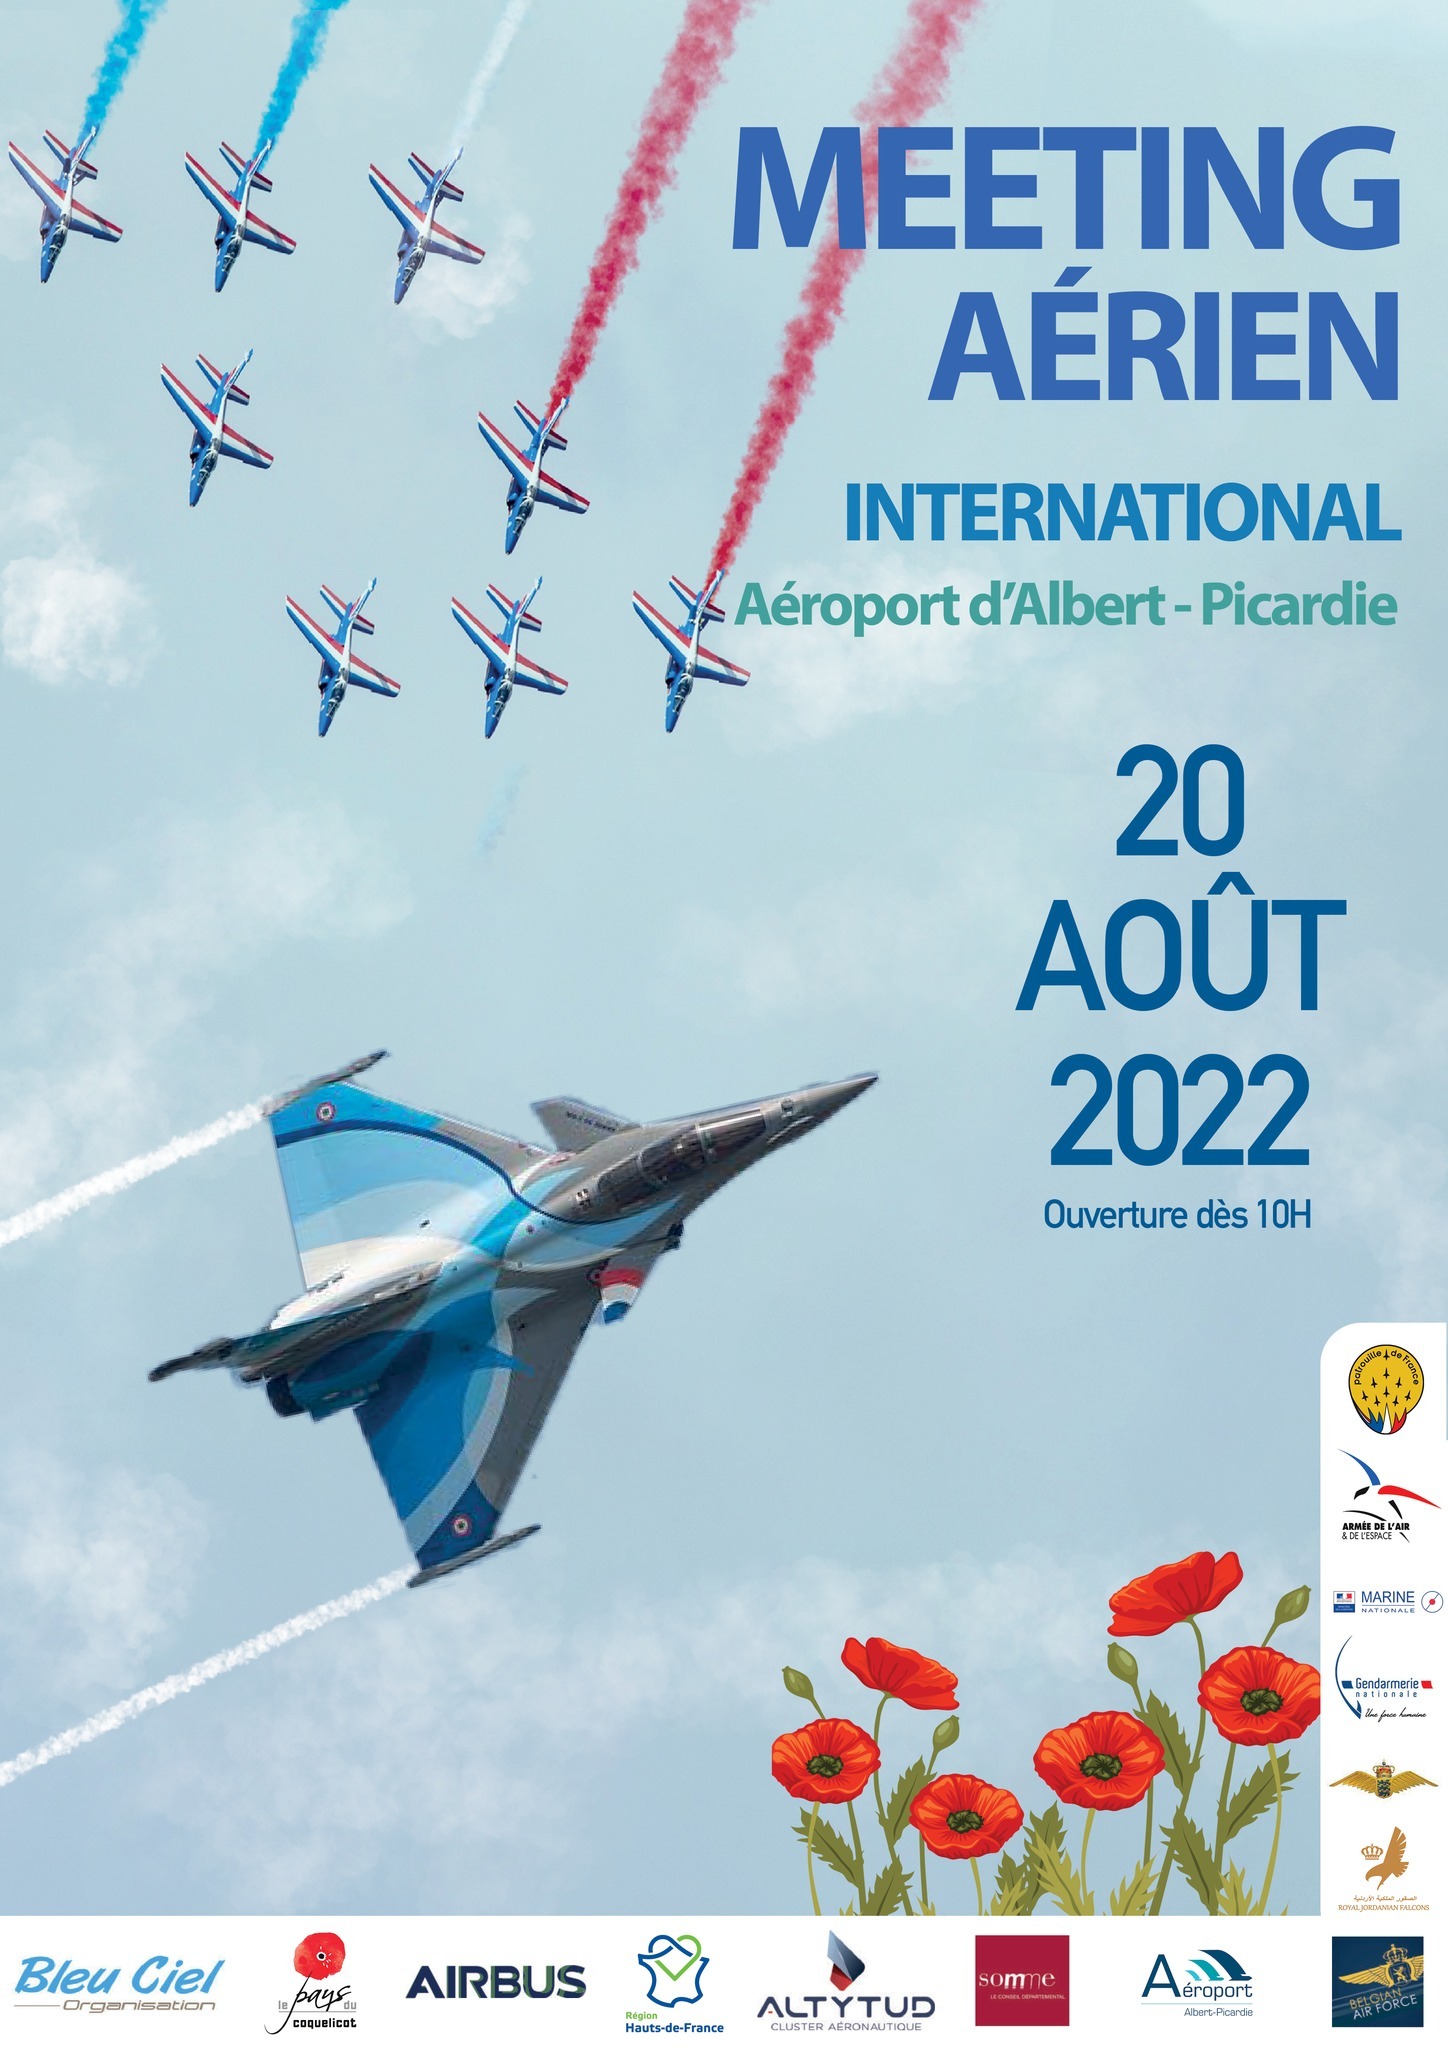 Meeting Aérien International à Albert-Picardie le samedi 20 août 2022 Z06t